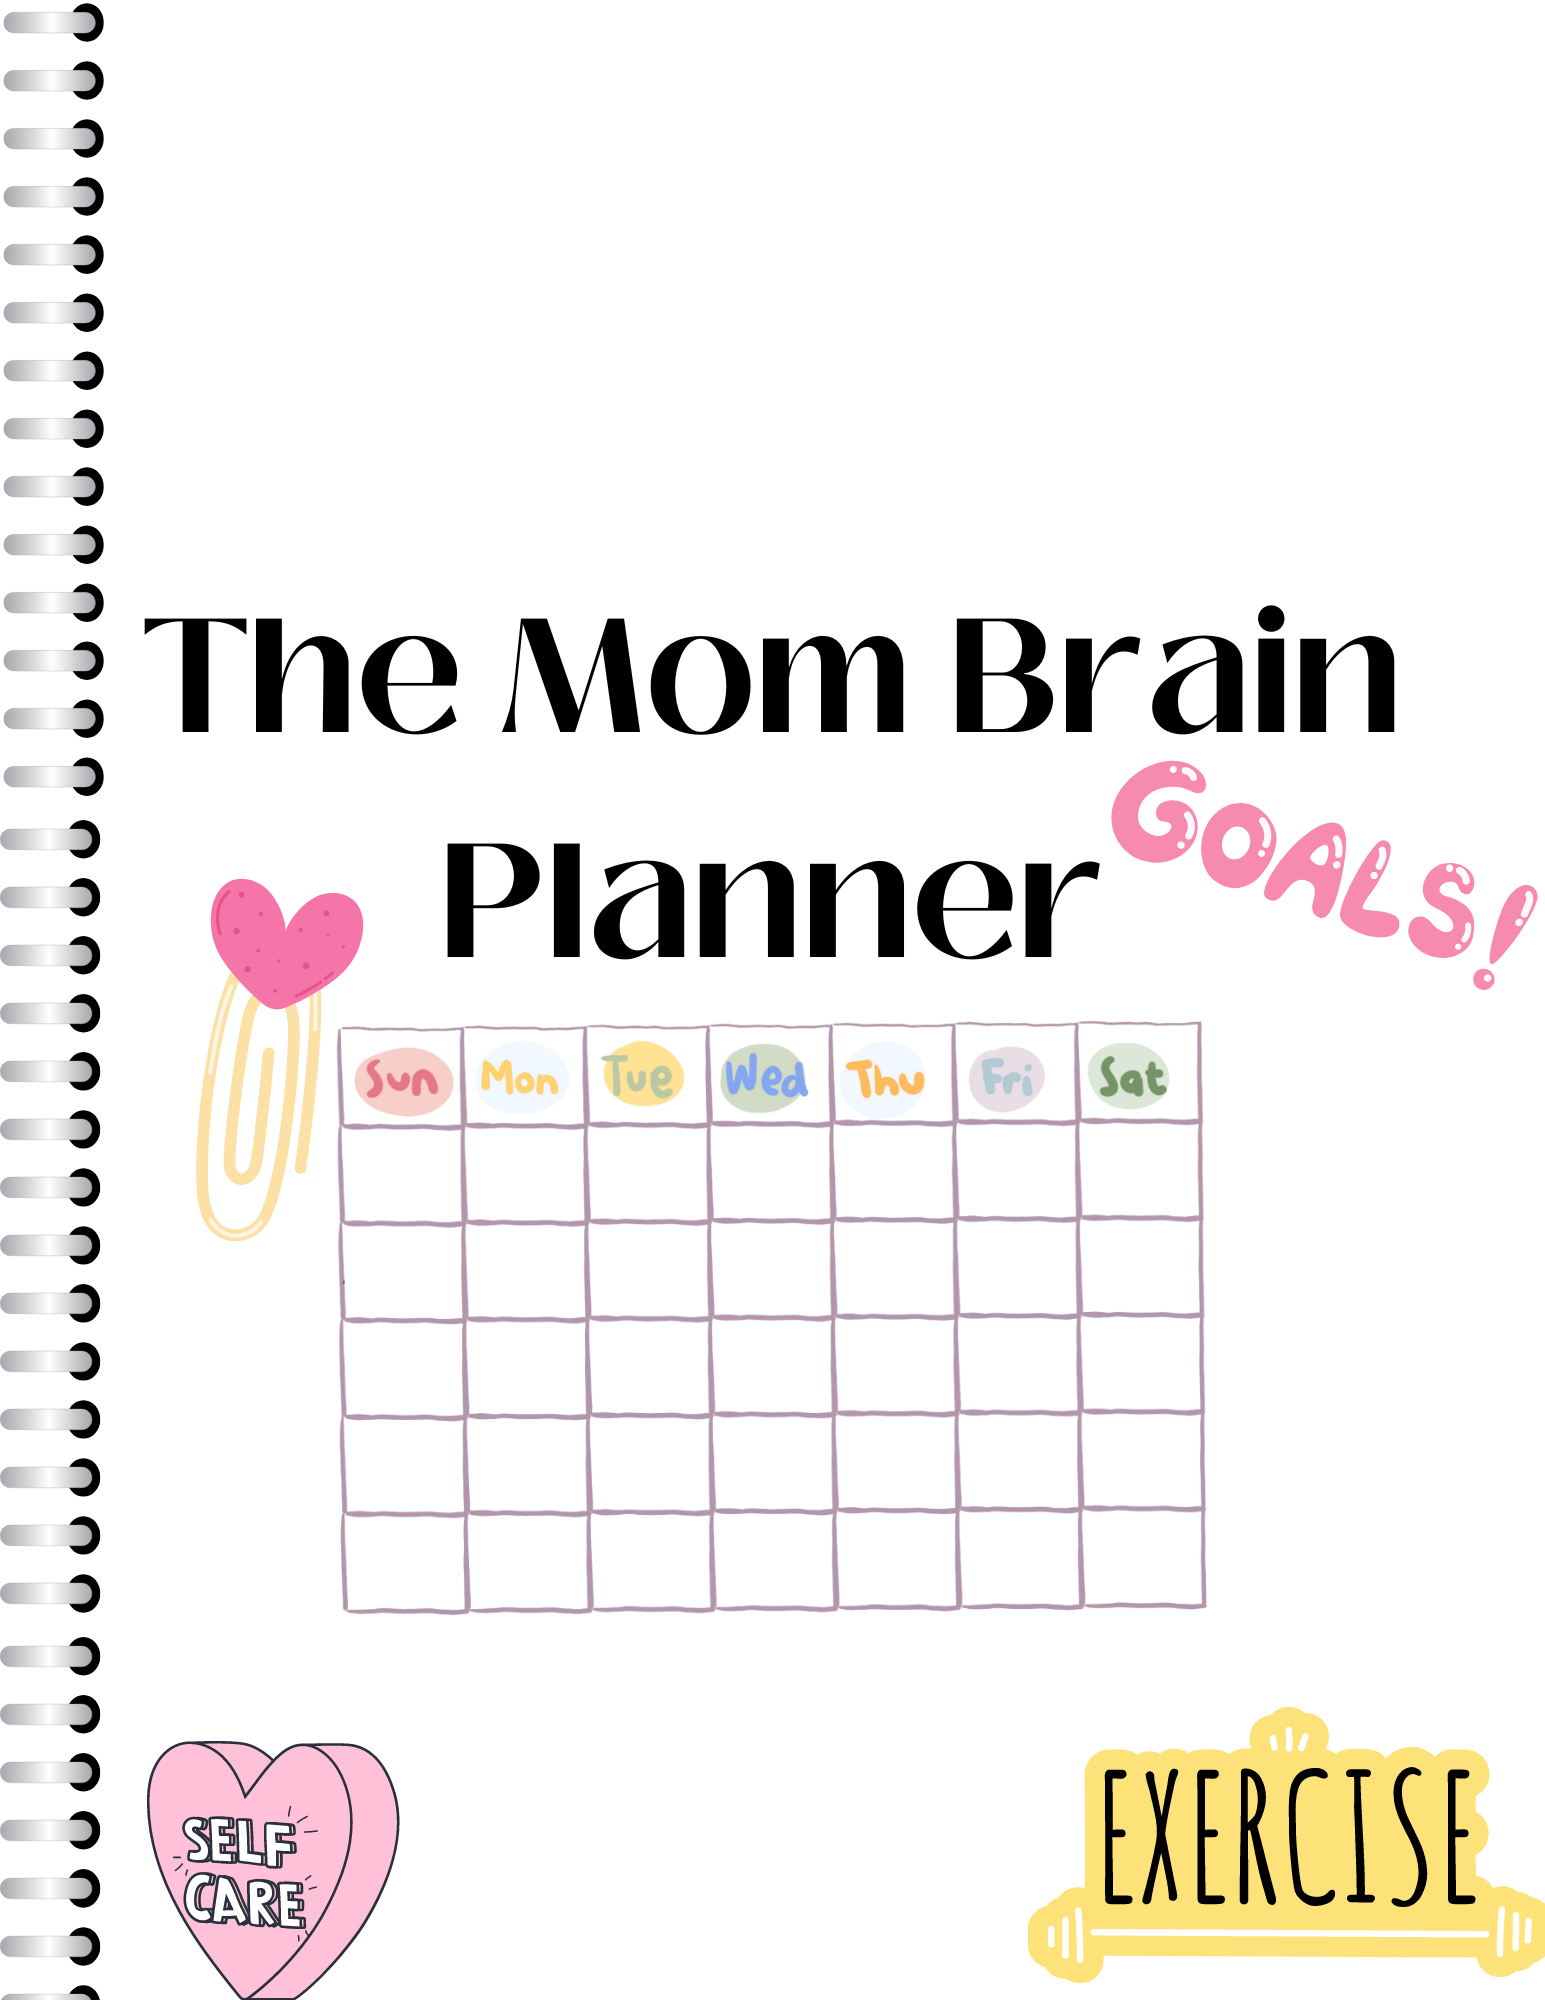 The Mom Brain Planner